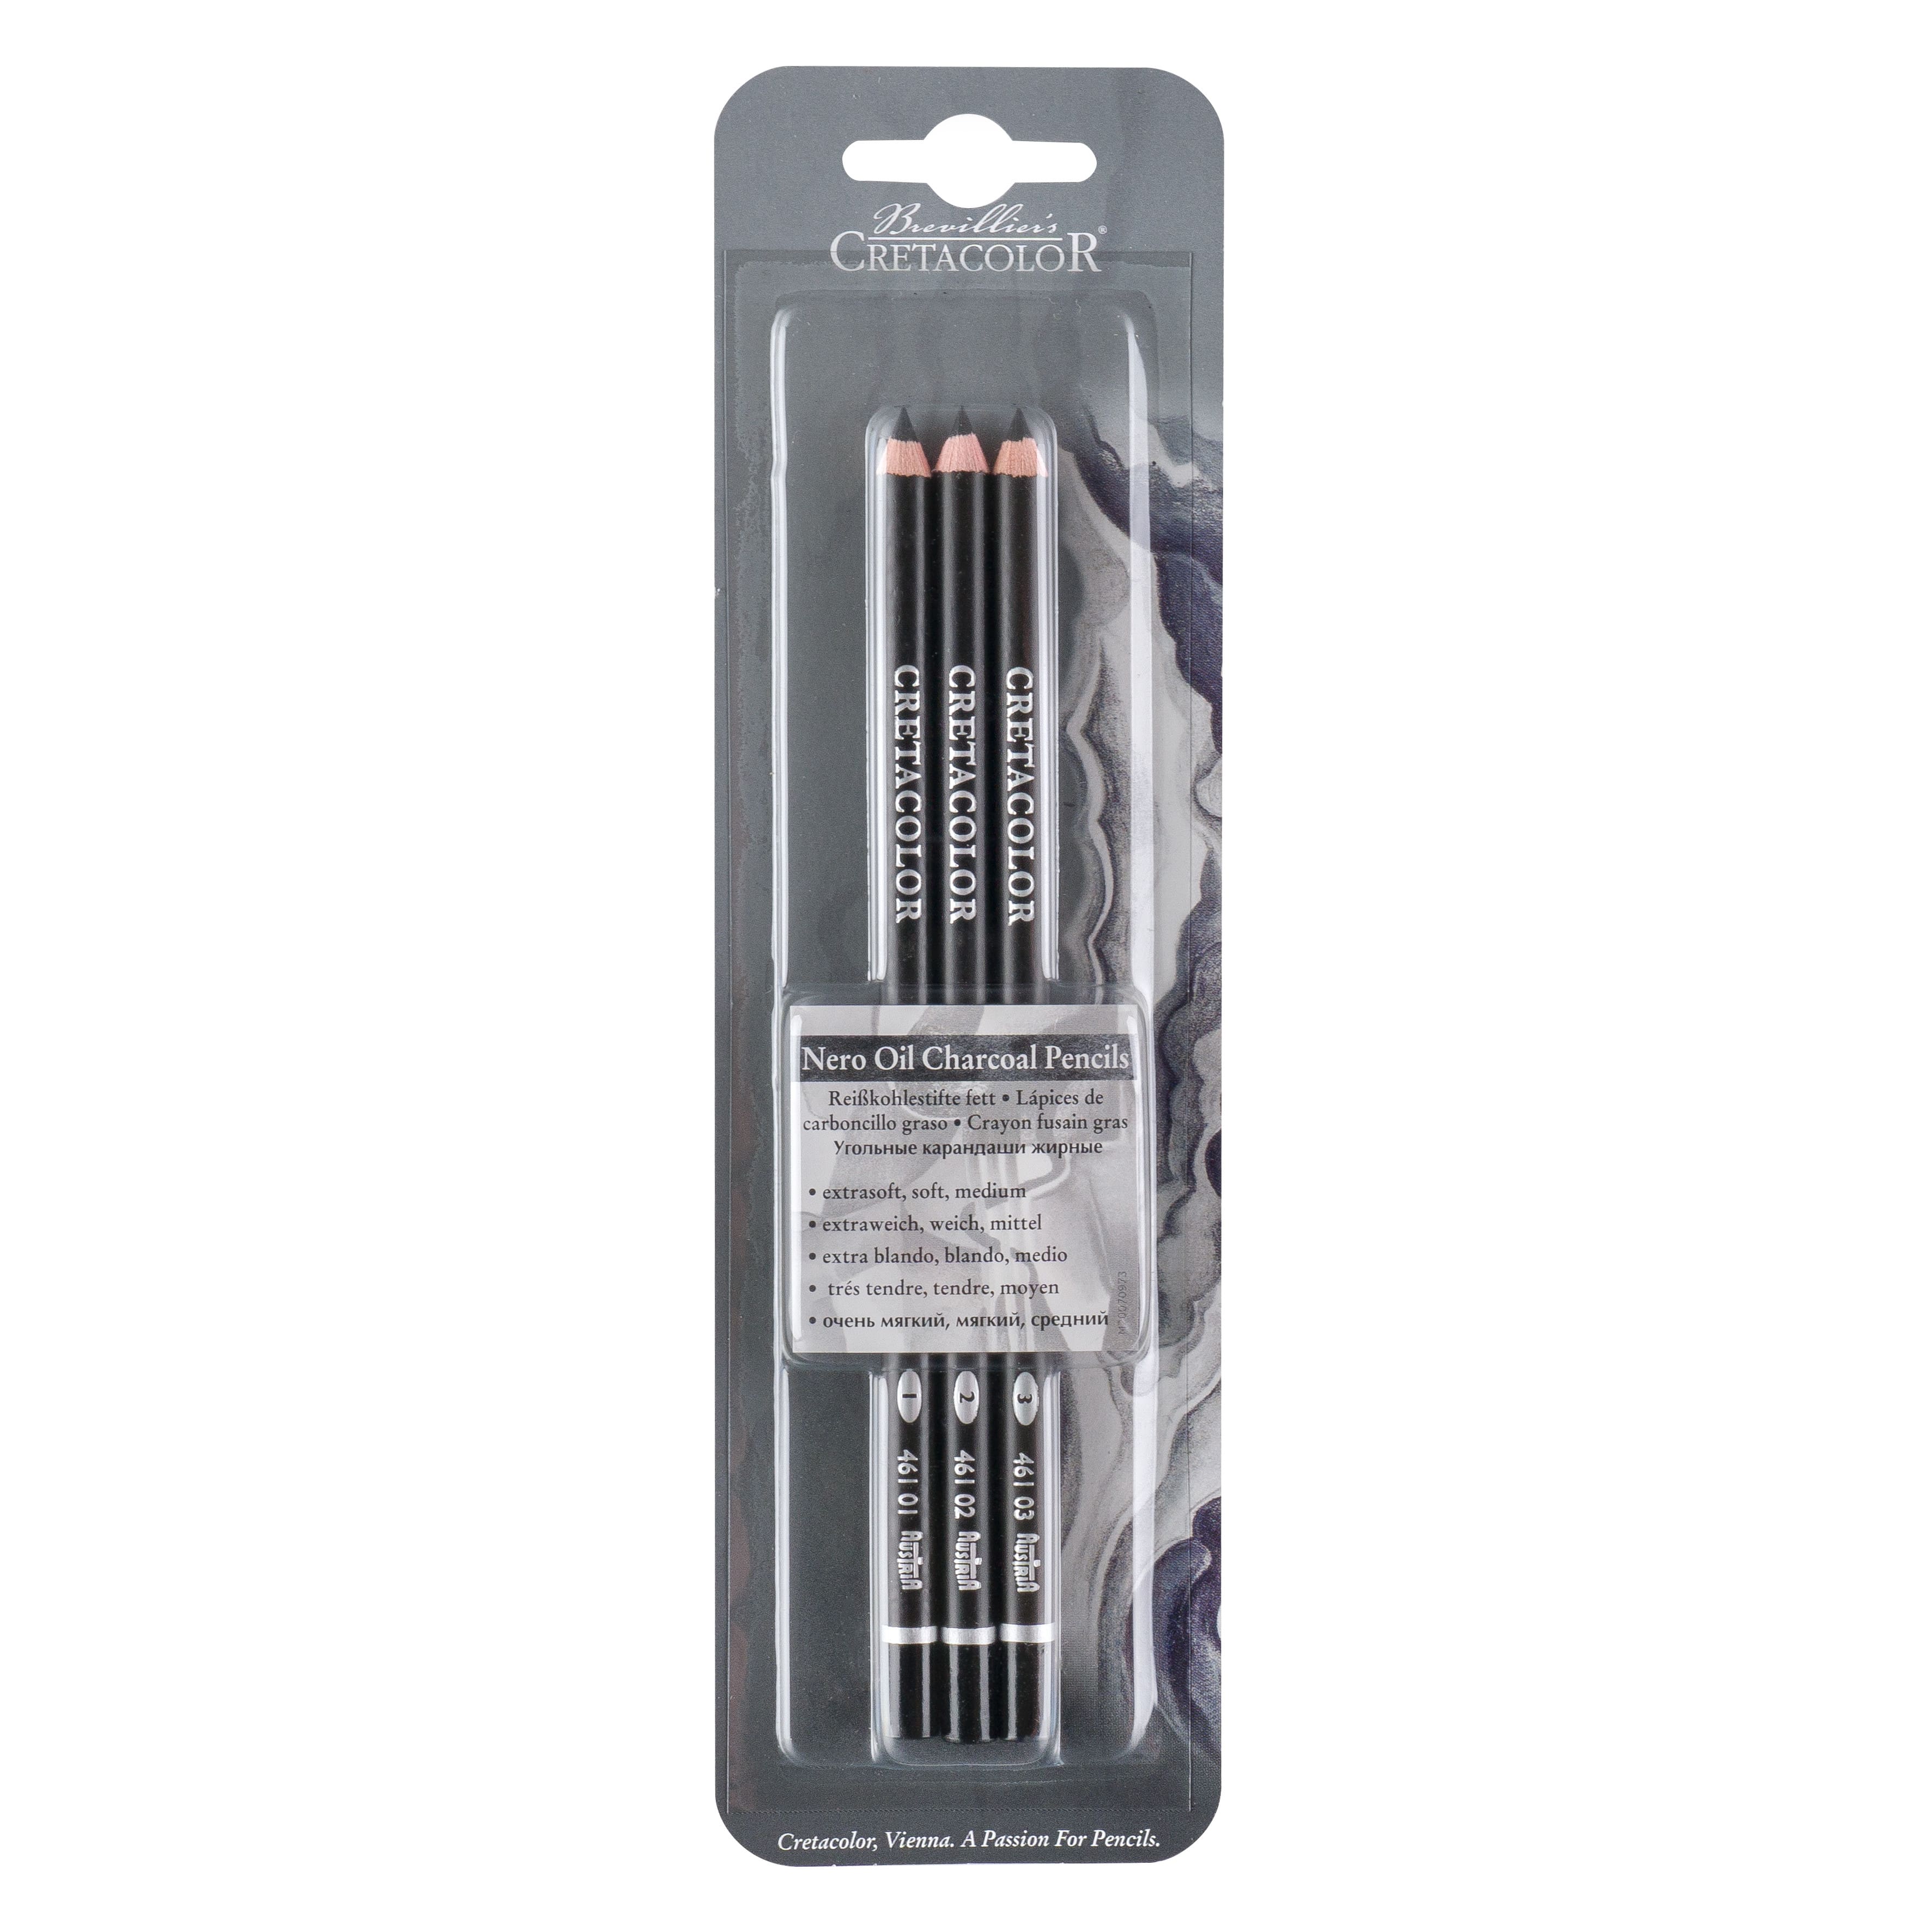 12 Packs: 3 ct. (36 total) Cretacolor Nero Oil Charcoal Pencils